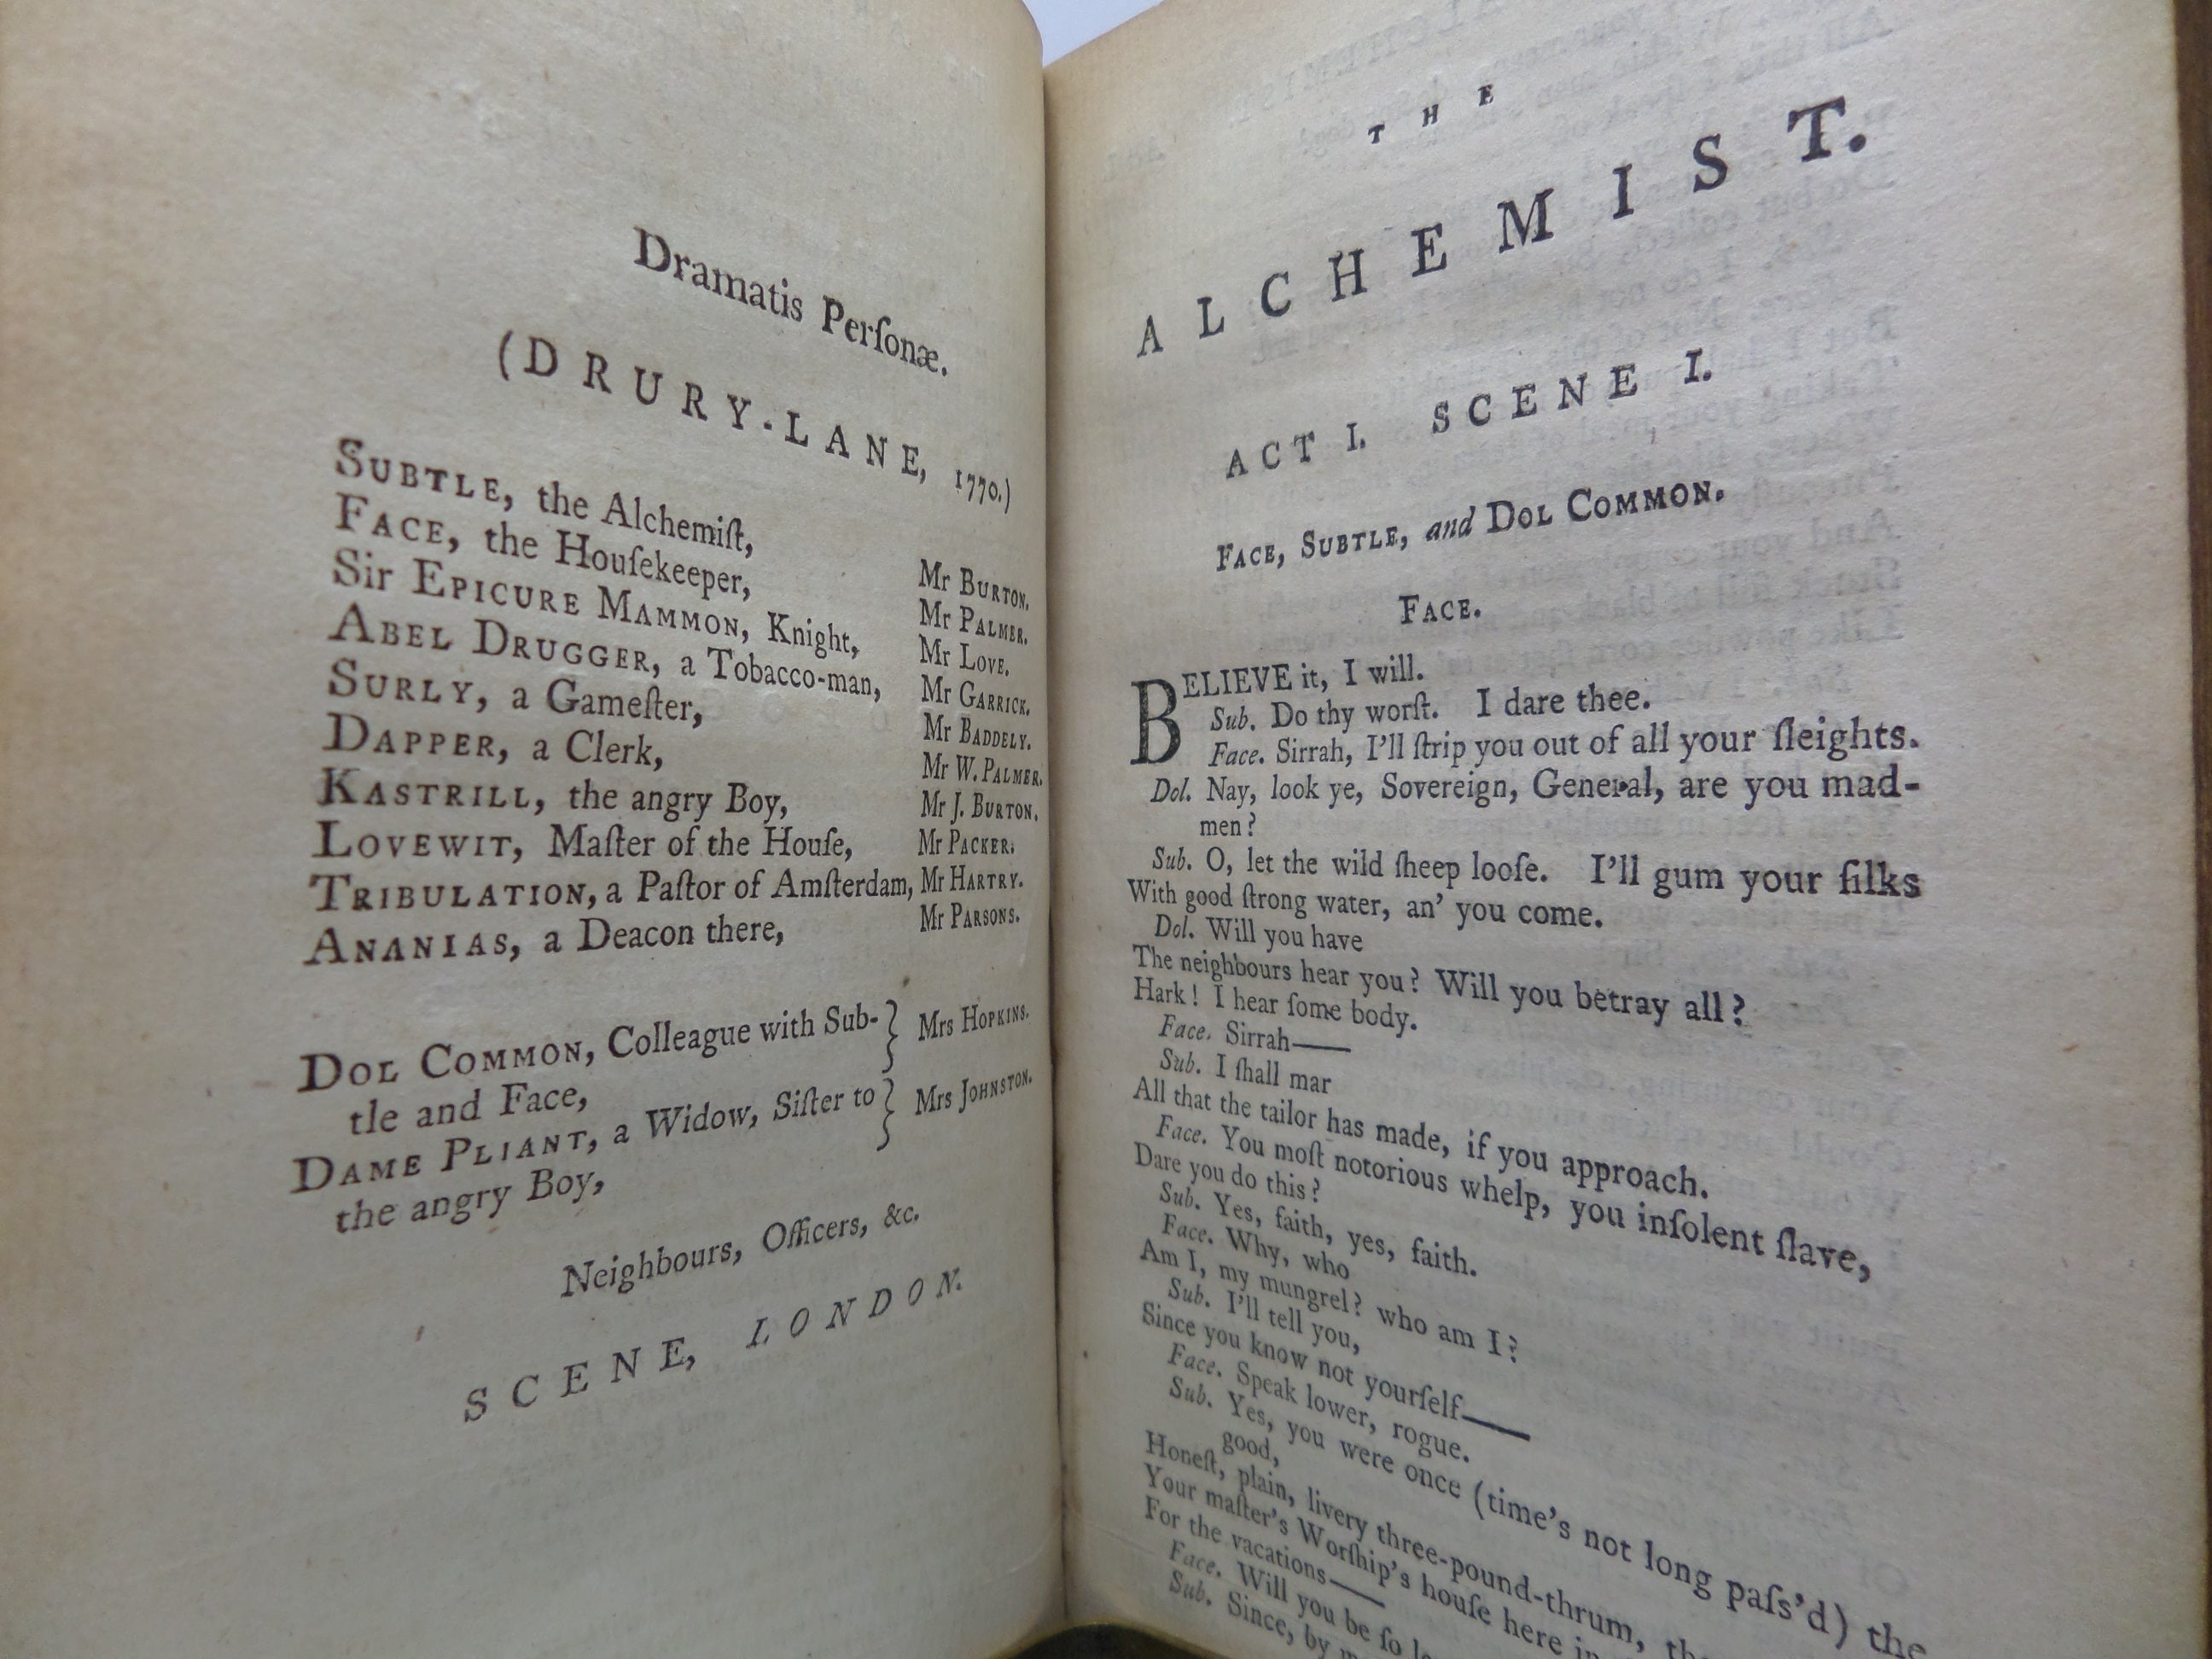 THE ALCHEMIST: A COMEDY BY BEN JOHNSON 1774